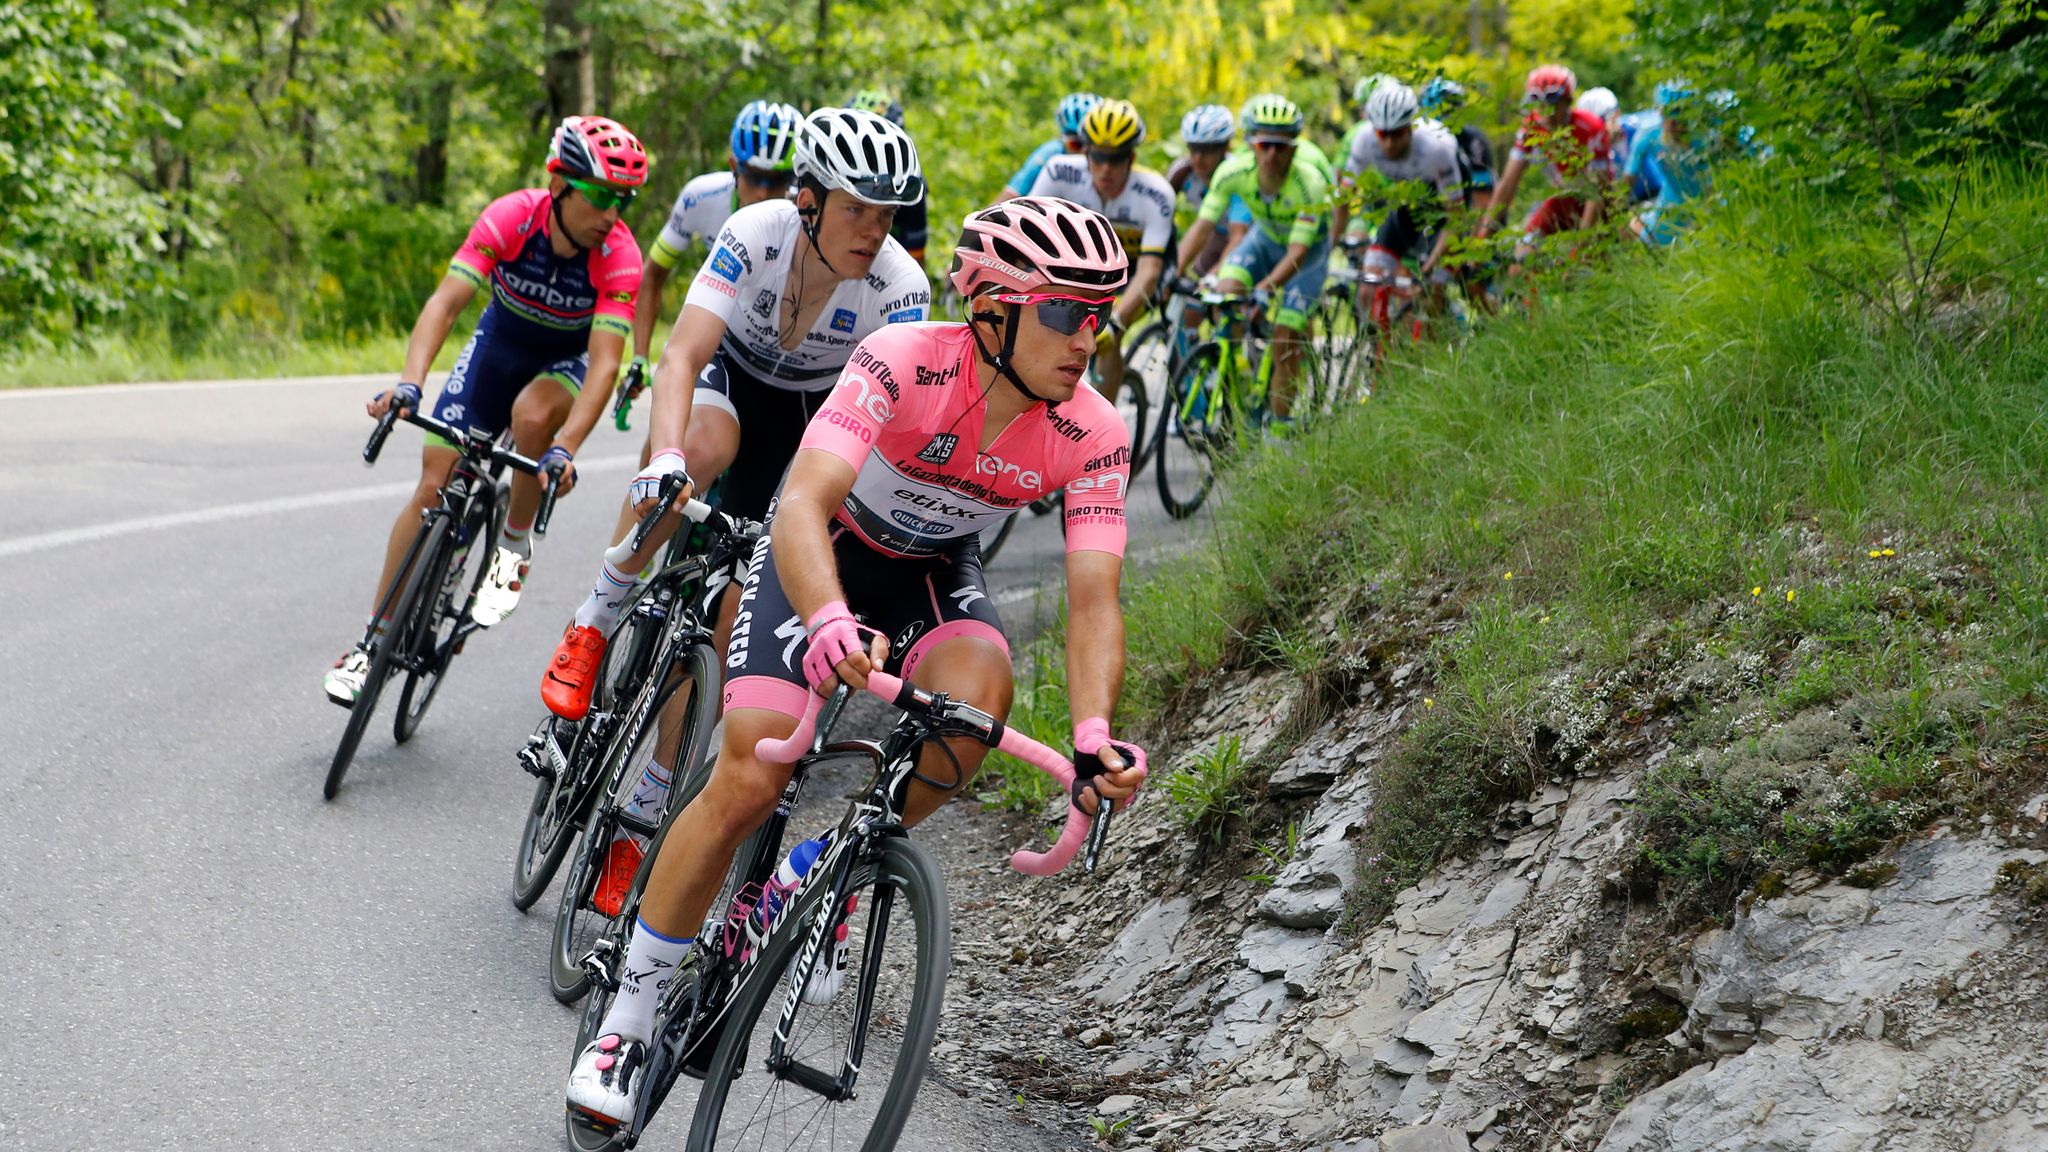 2016 Team LaGazzettadello Sport Tour de Italia Road Bike Wear